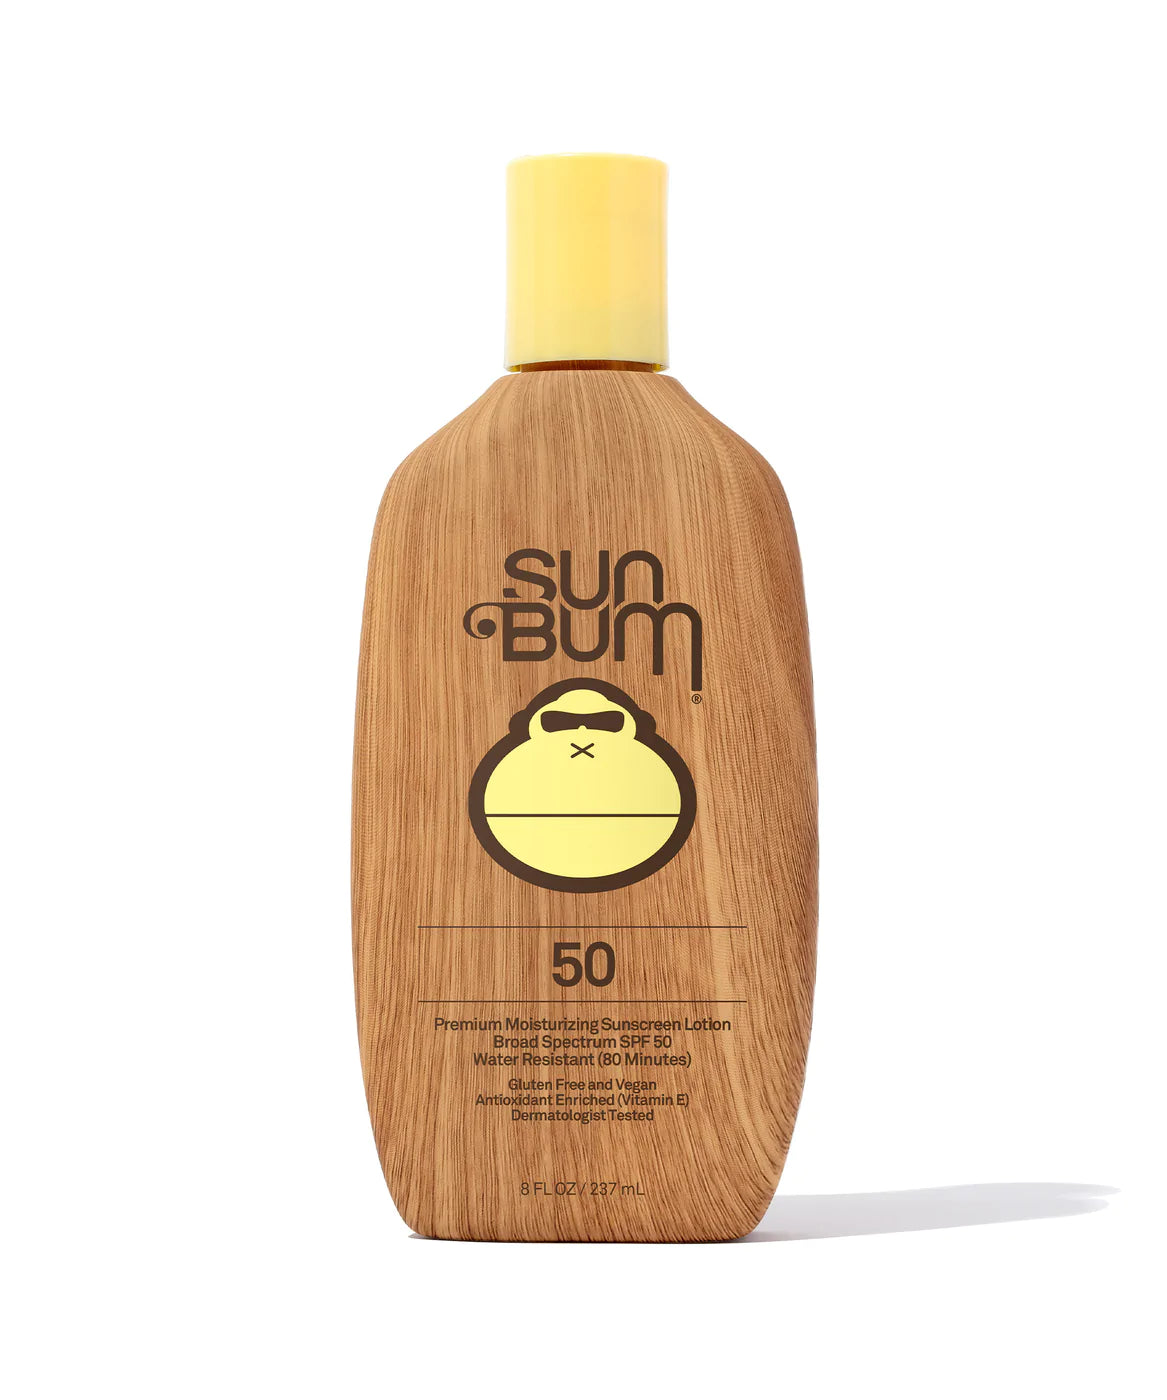 Sun Bum Original Sunscreen Lotion SPF 50, 8 oz